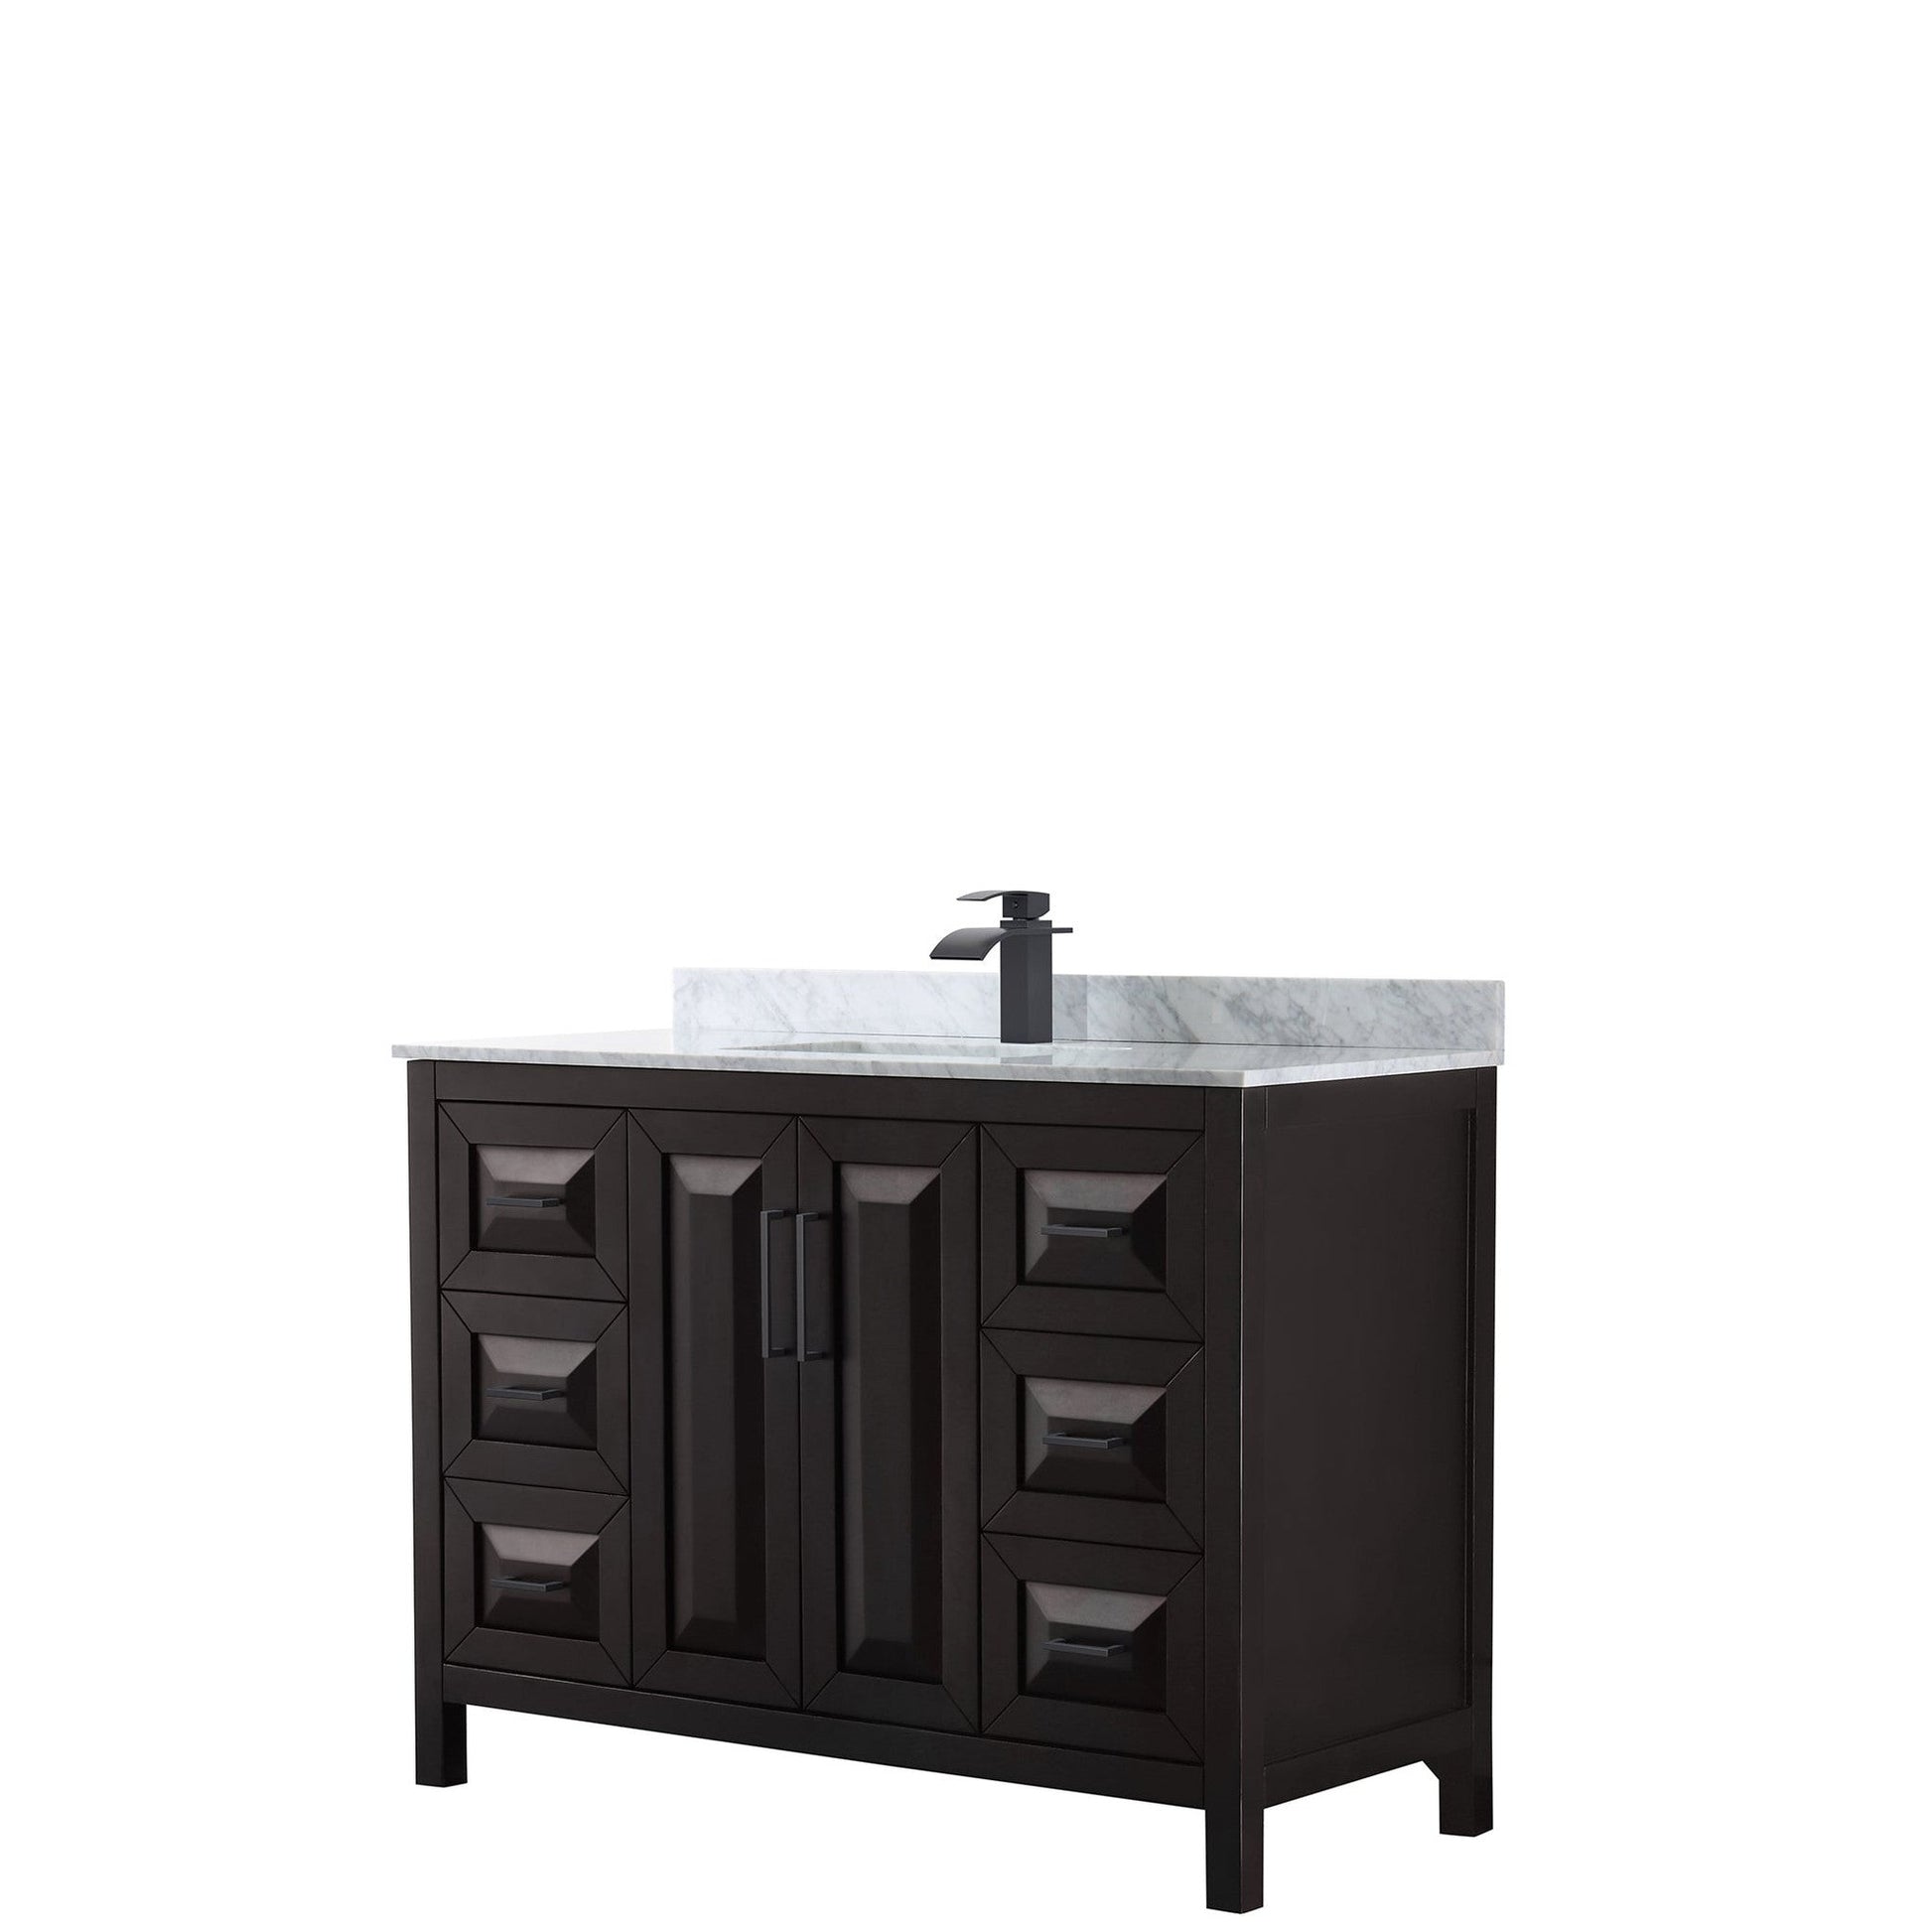 Daria 48" Single Bathroom Vanity in Dark Espresso, White Carrara Marble Countertop, Undermount Square Sink, Matte Black Trim